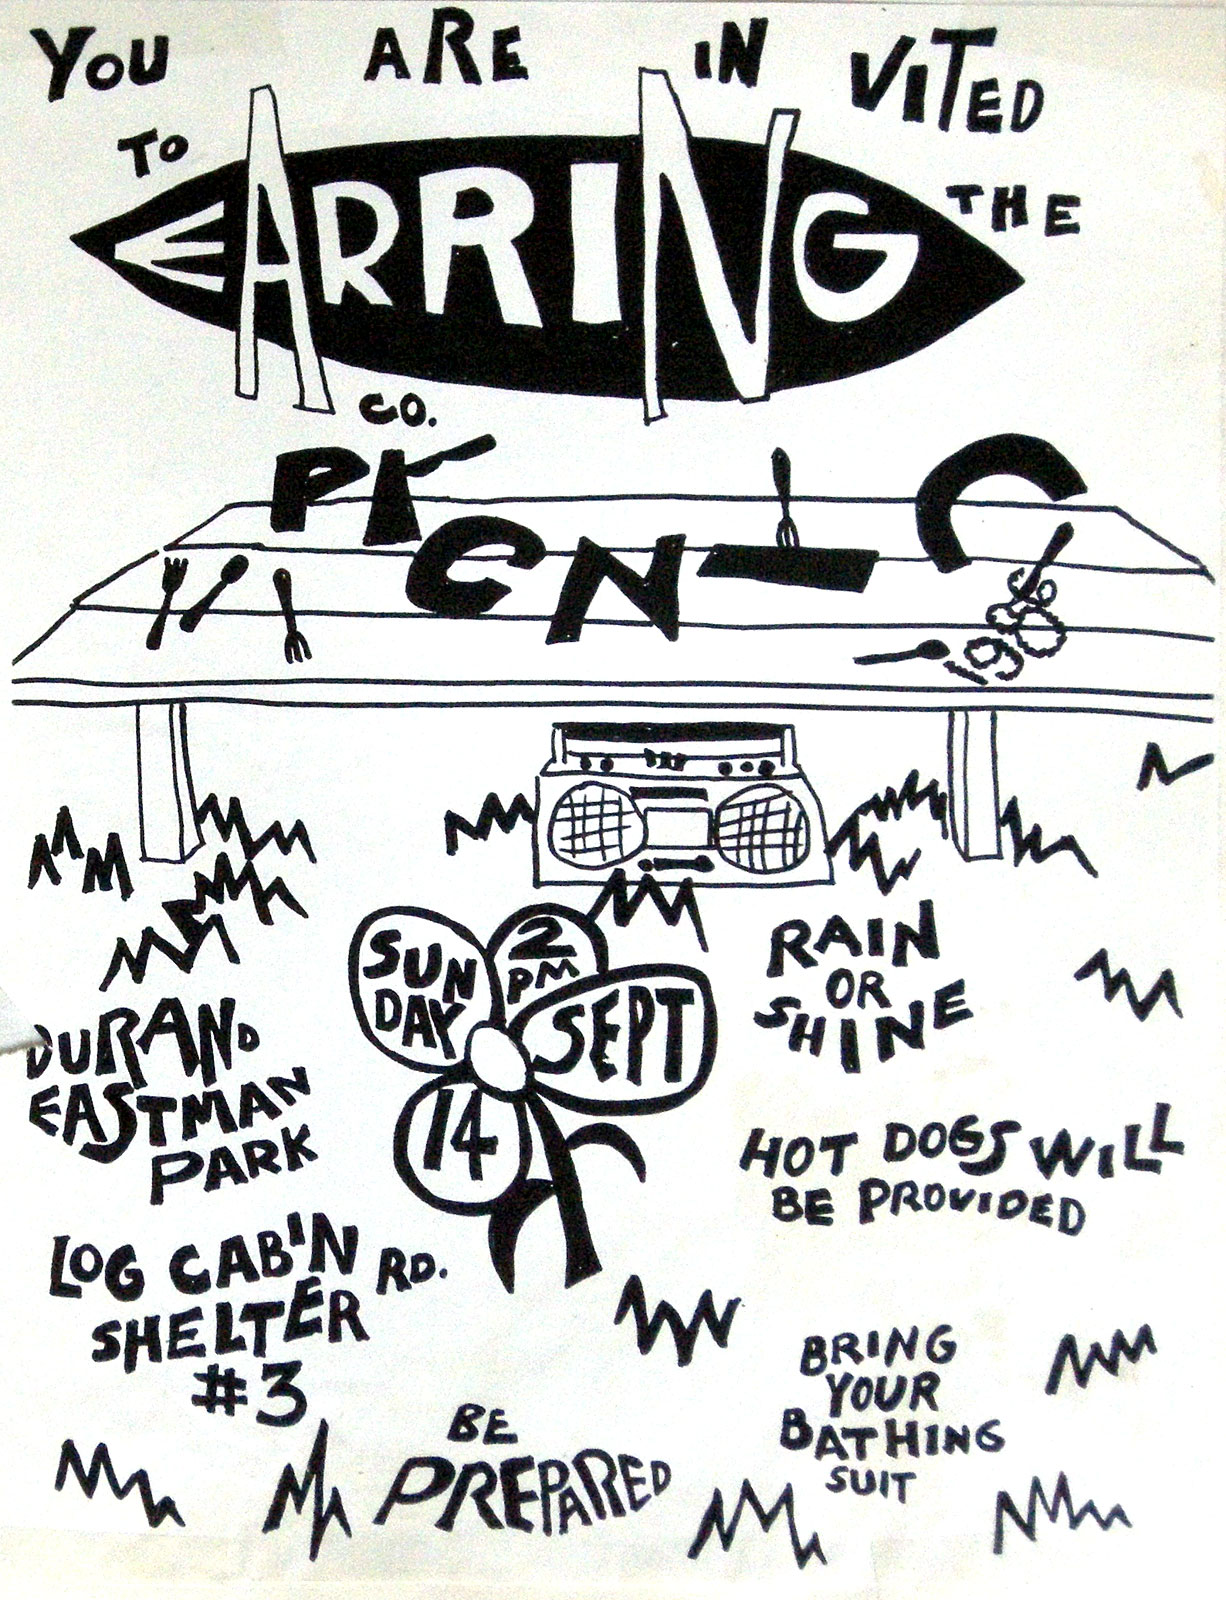 Earring Records Company Picnic invitation 1986